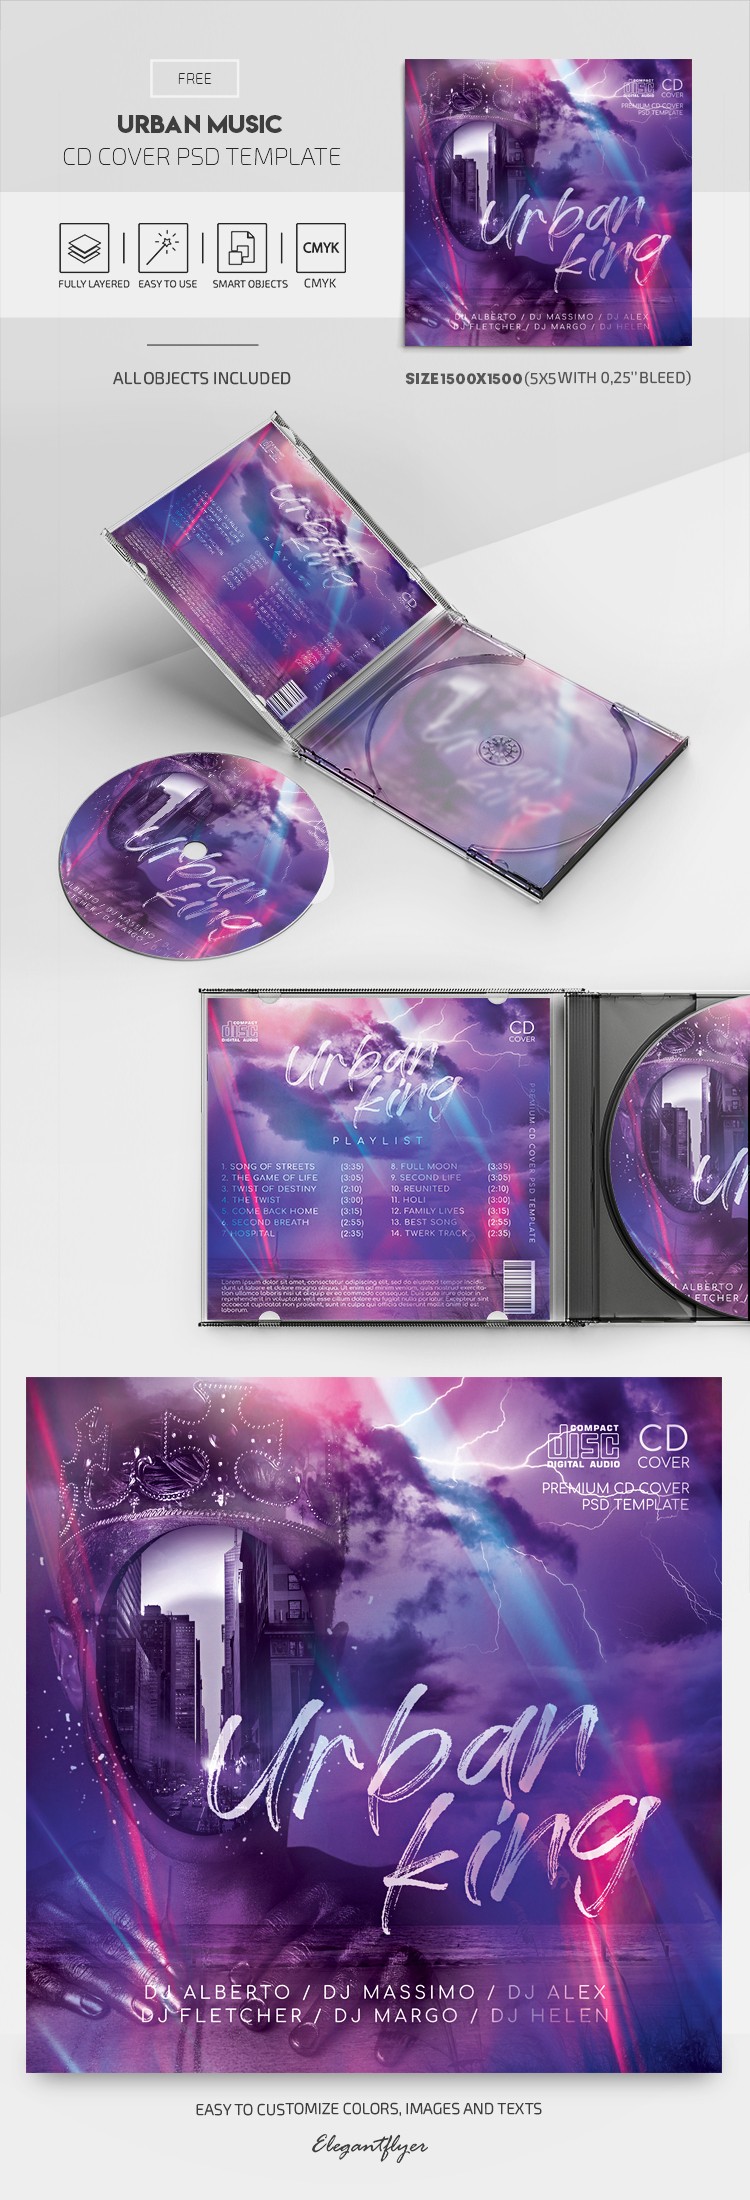 Urban Music CD Cover by ElegantFlyer